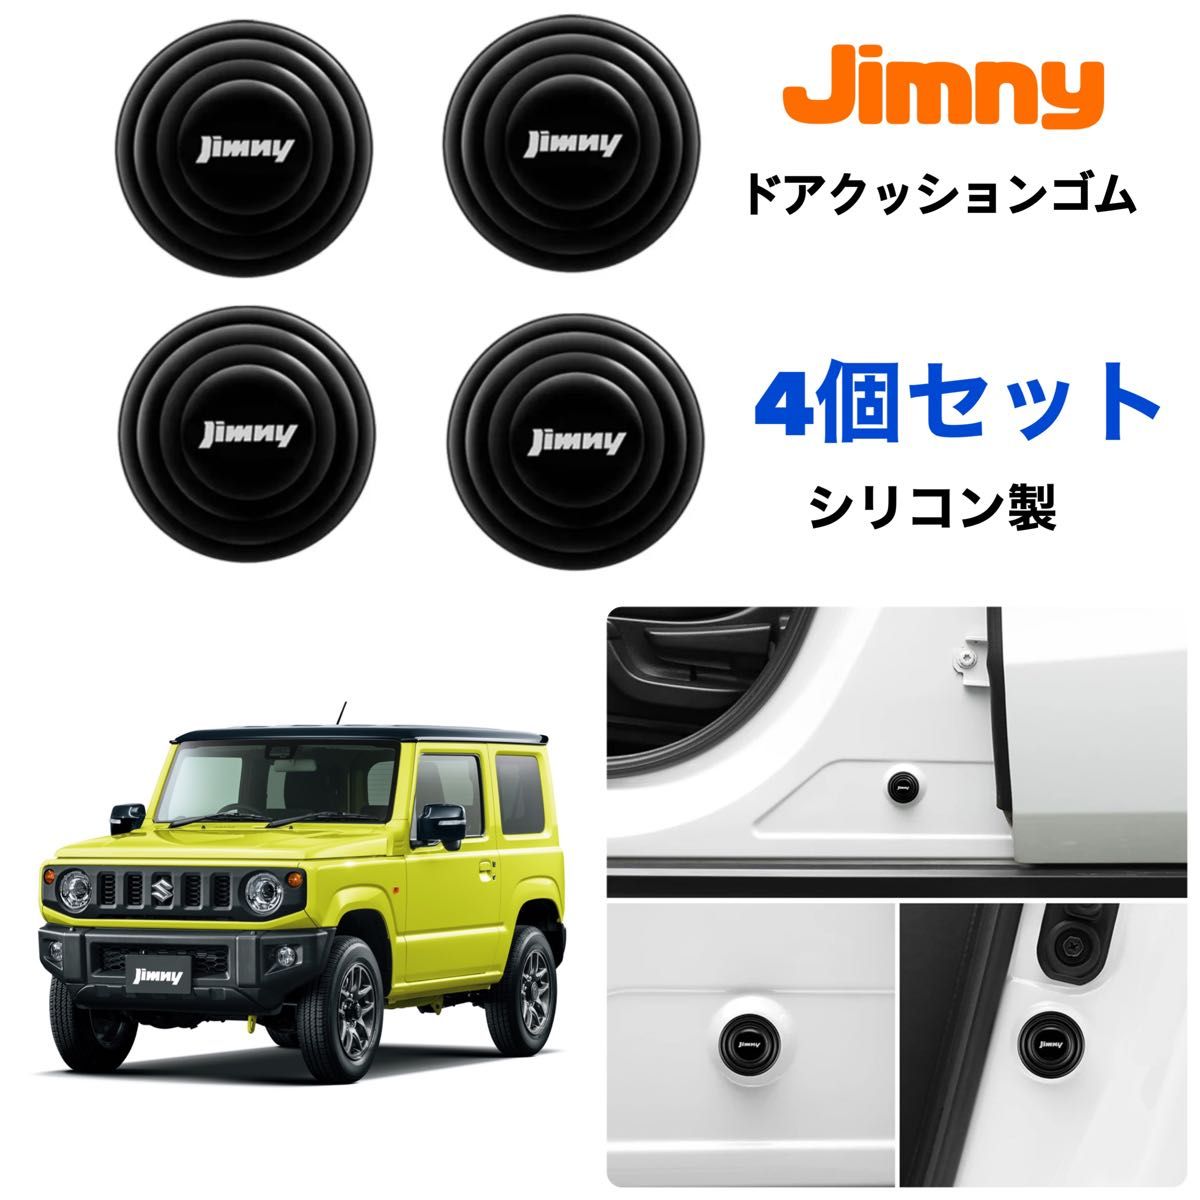 Jimny ドア クッションゴム 4個セット シリコン製 衝撃吸収 ジムニー